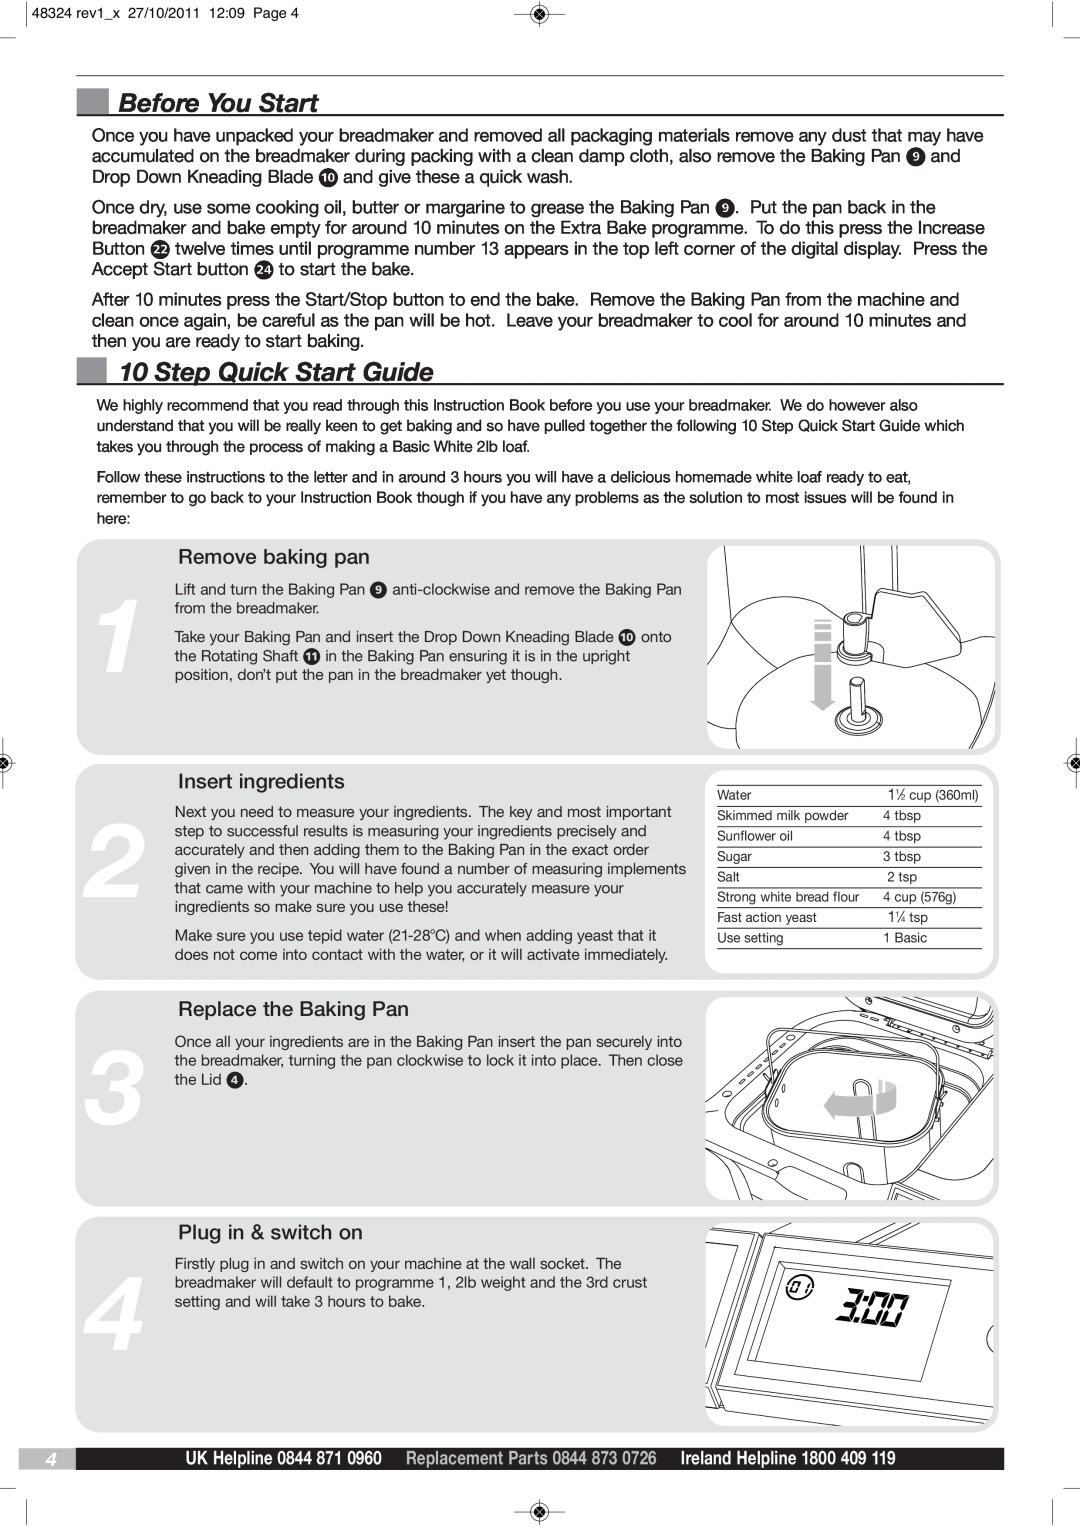 Morphy Richards BM48324 manual Before You Start, Step Quick Start Guide, Remove baking pan, Insert ingredients 